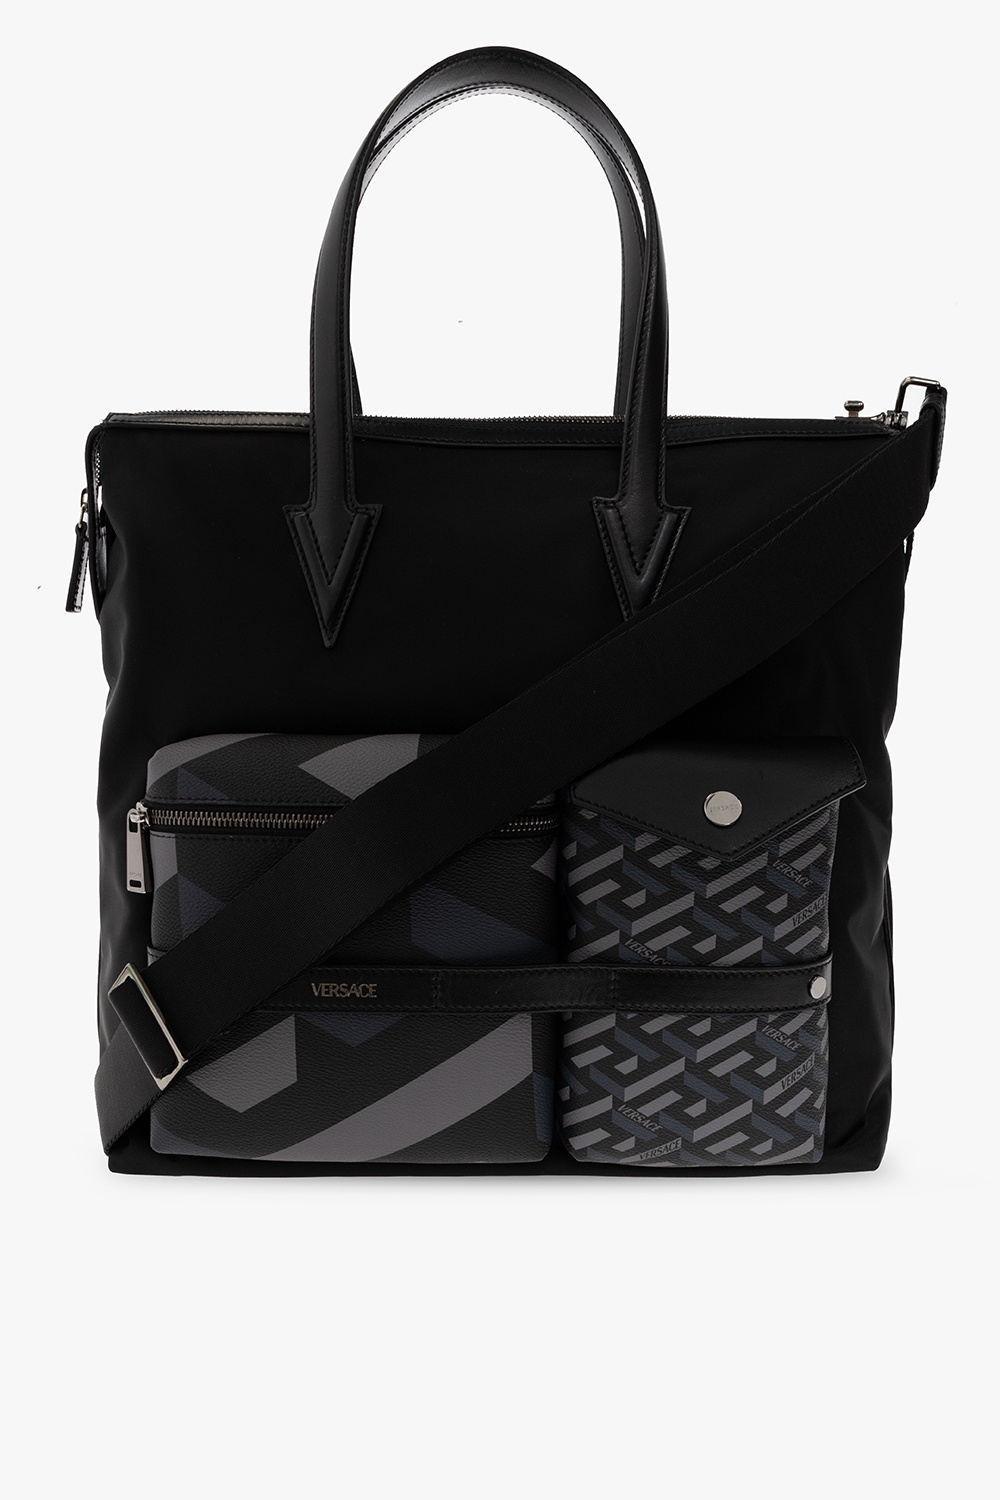 Versace tommy hilfiger ella pebble pvc flap backpack